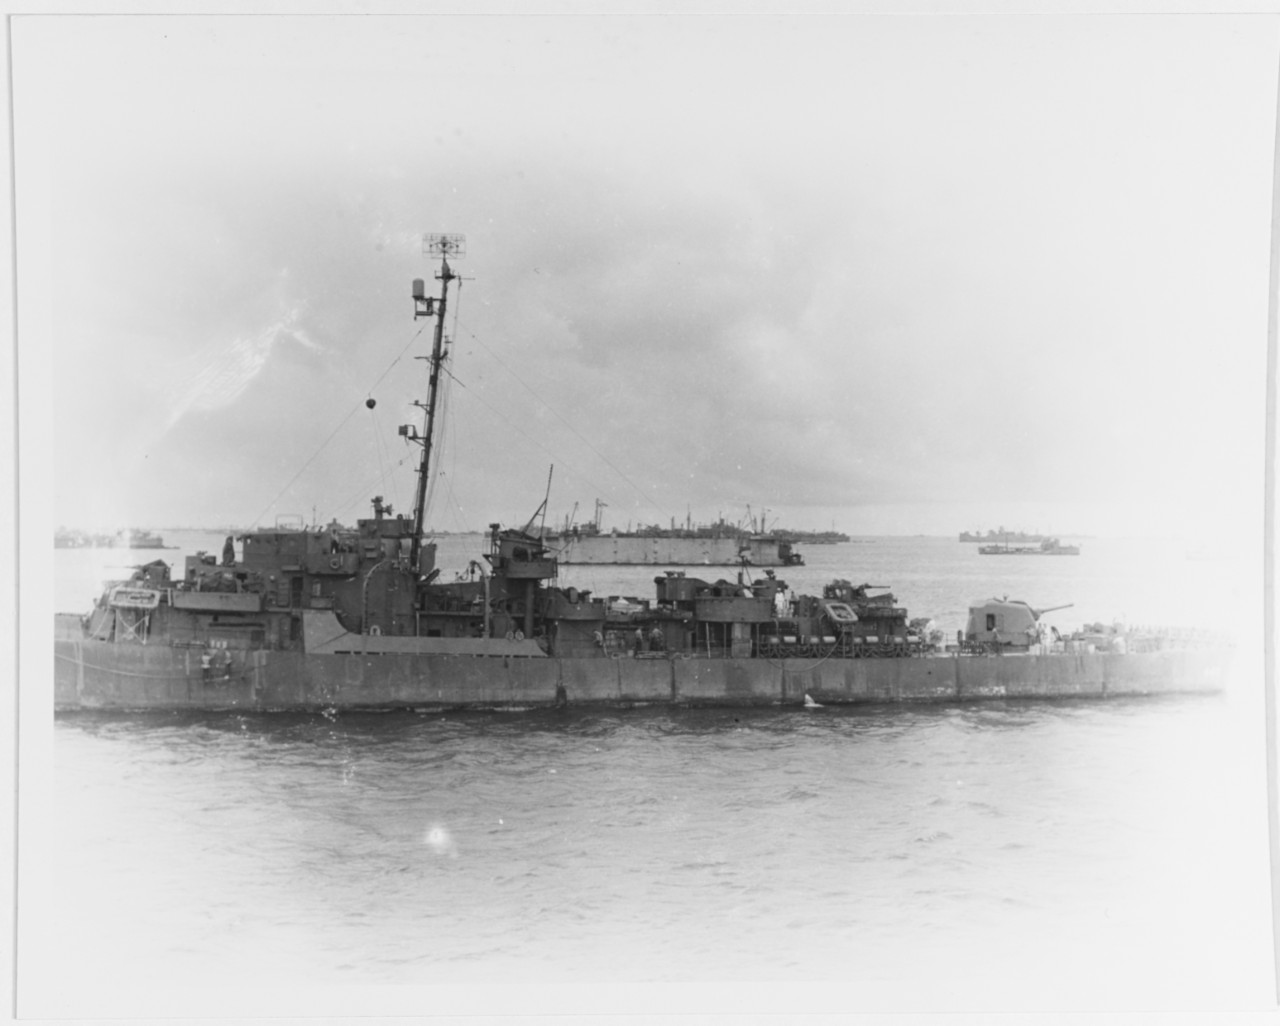 Scene at Saipan, circa August 1945